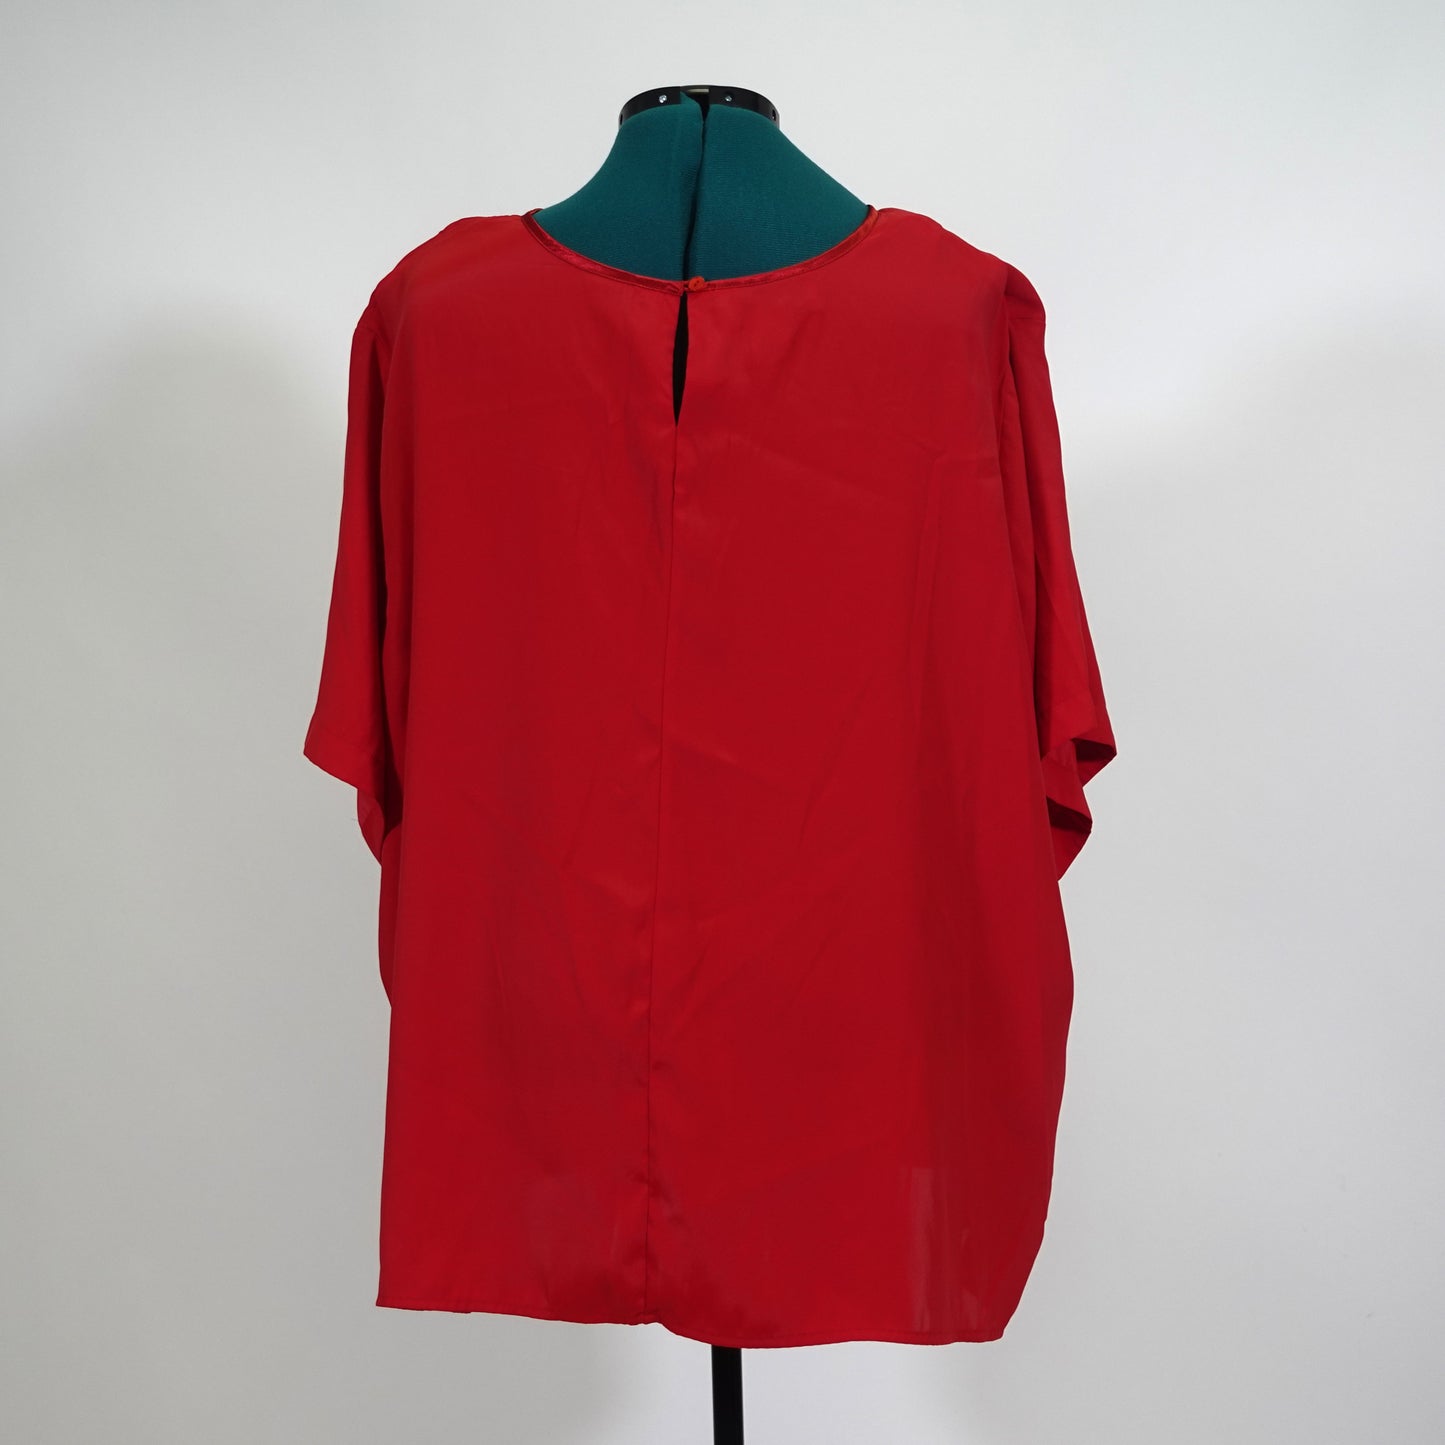 Vintage Red Satin Short Sleeve Top